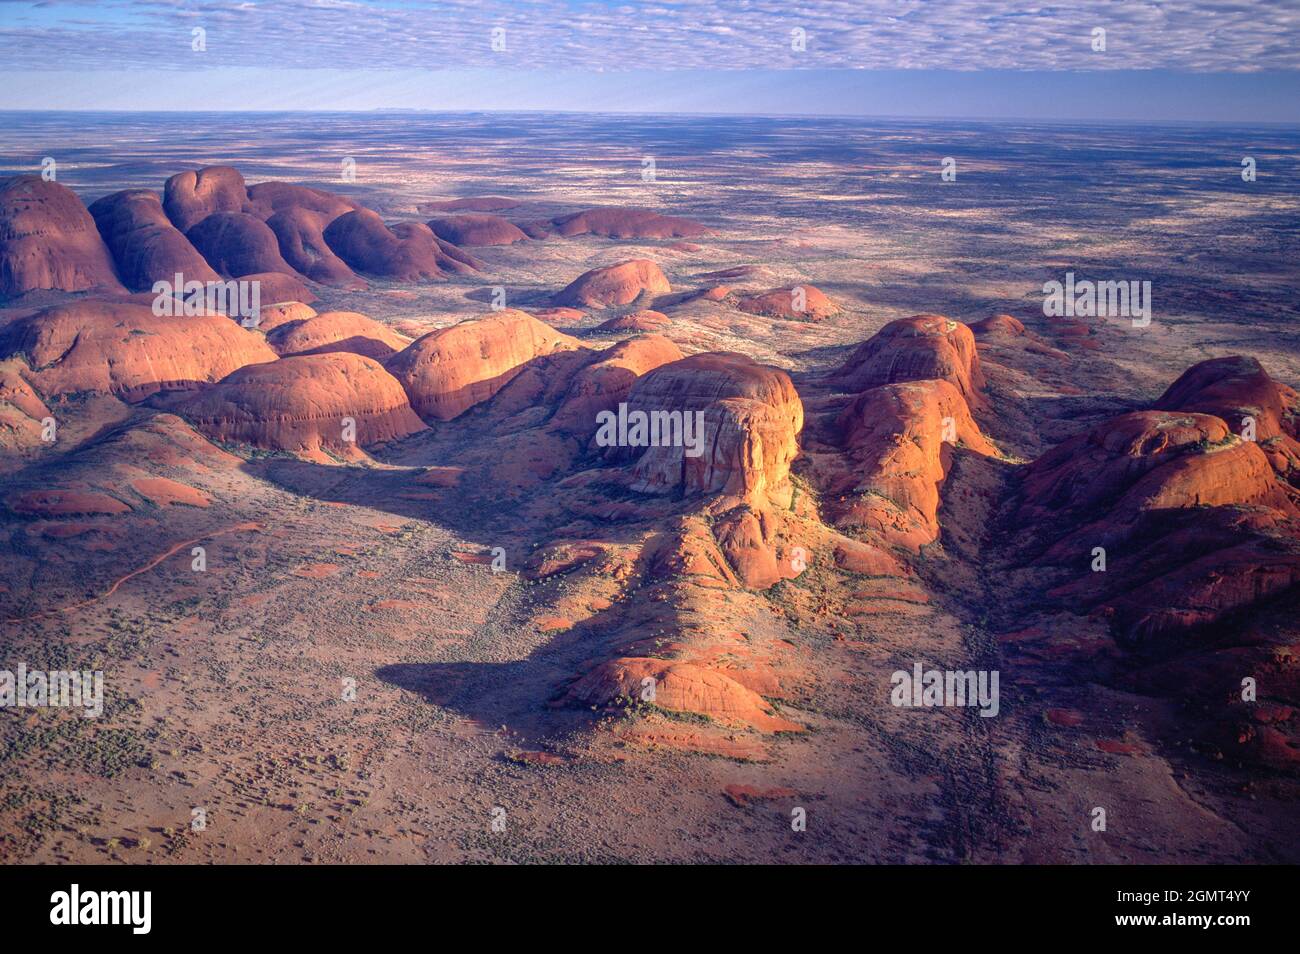 The  amazing Kata Tjuta (Olgas) sandstone rock formations in Uluru-Kata Tjuta National Park in outback Australia. Stock Photo